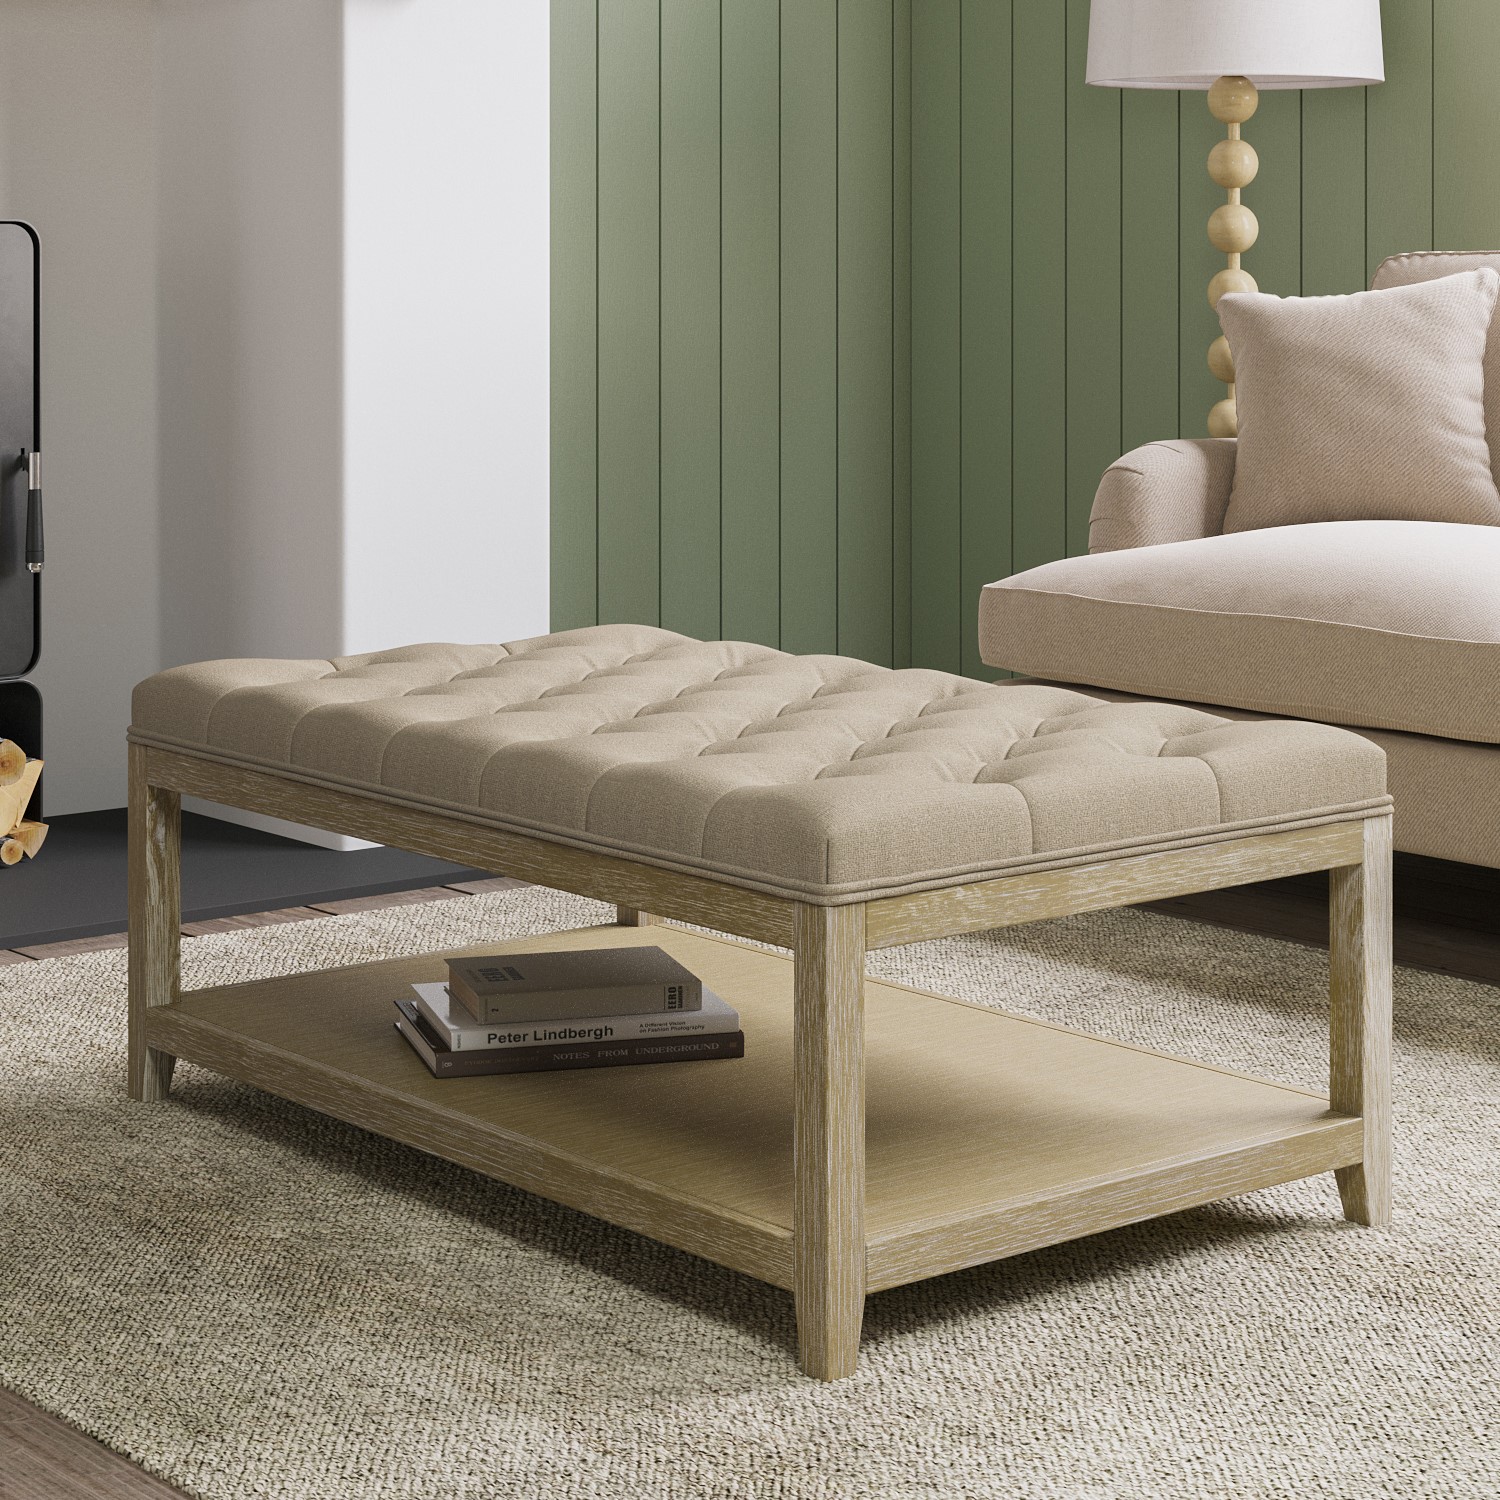 Photo of Rectangular beige linen upholstered coffee table footstool - lillian